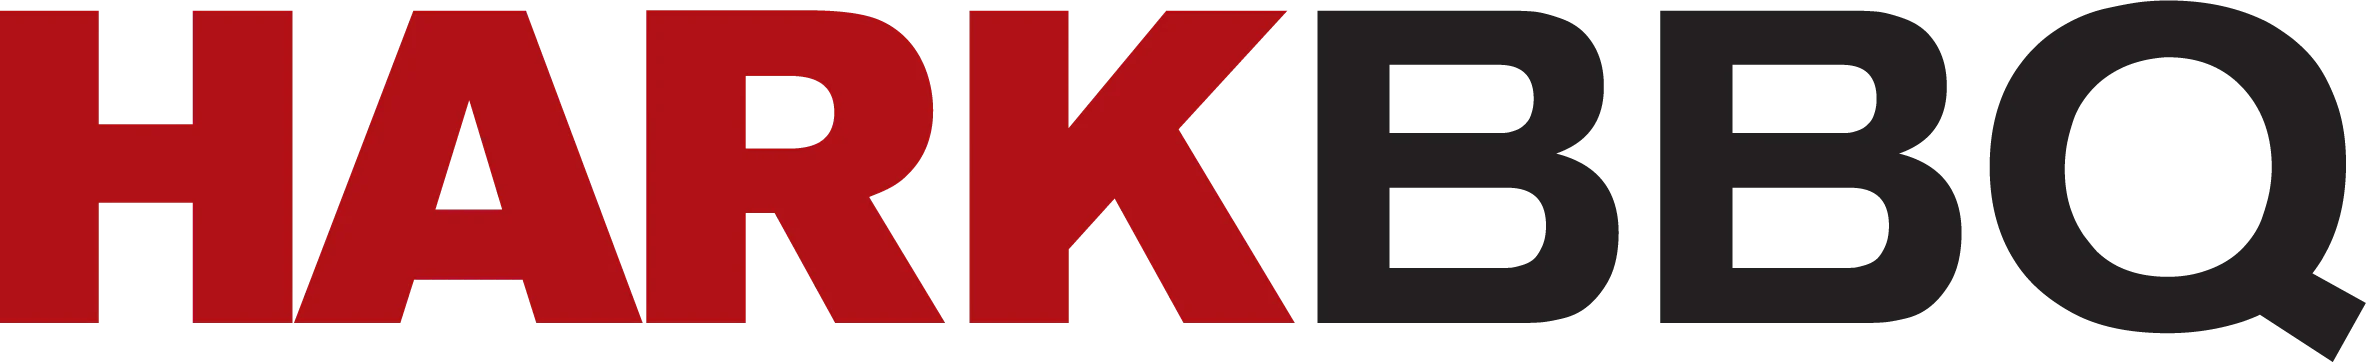 Hark logo